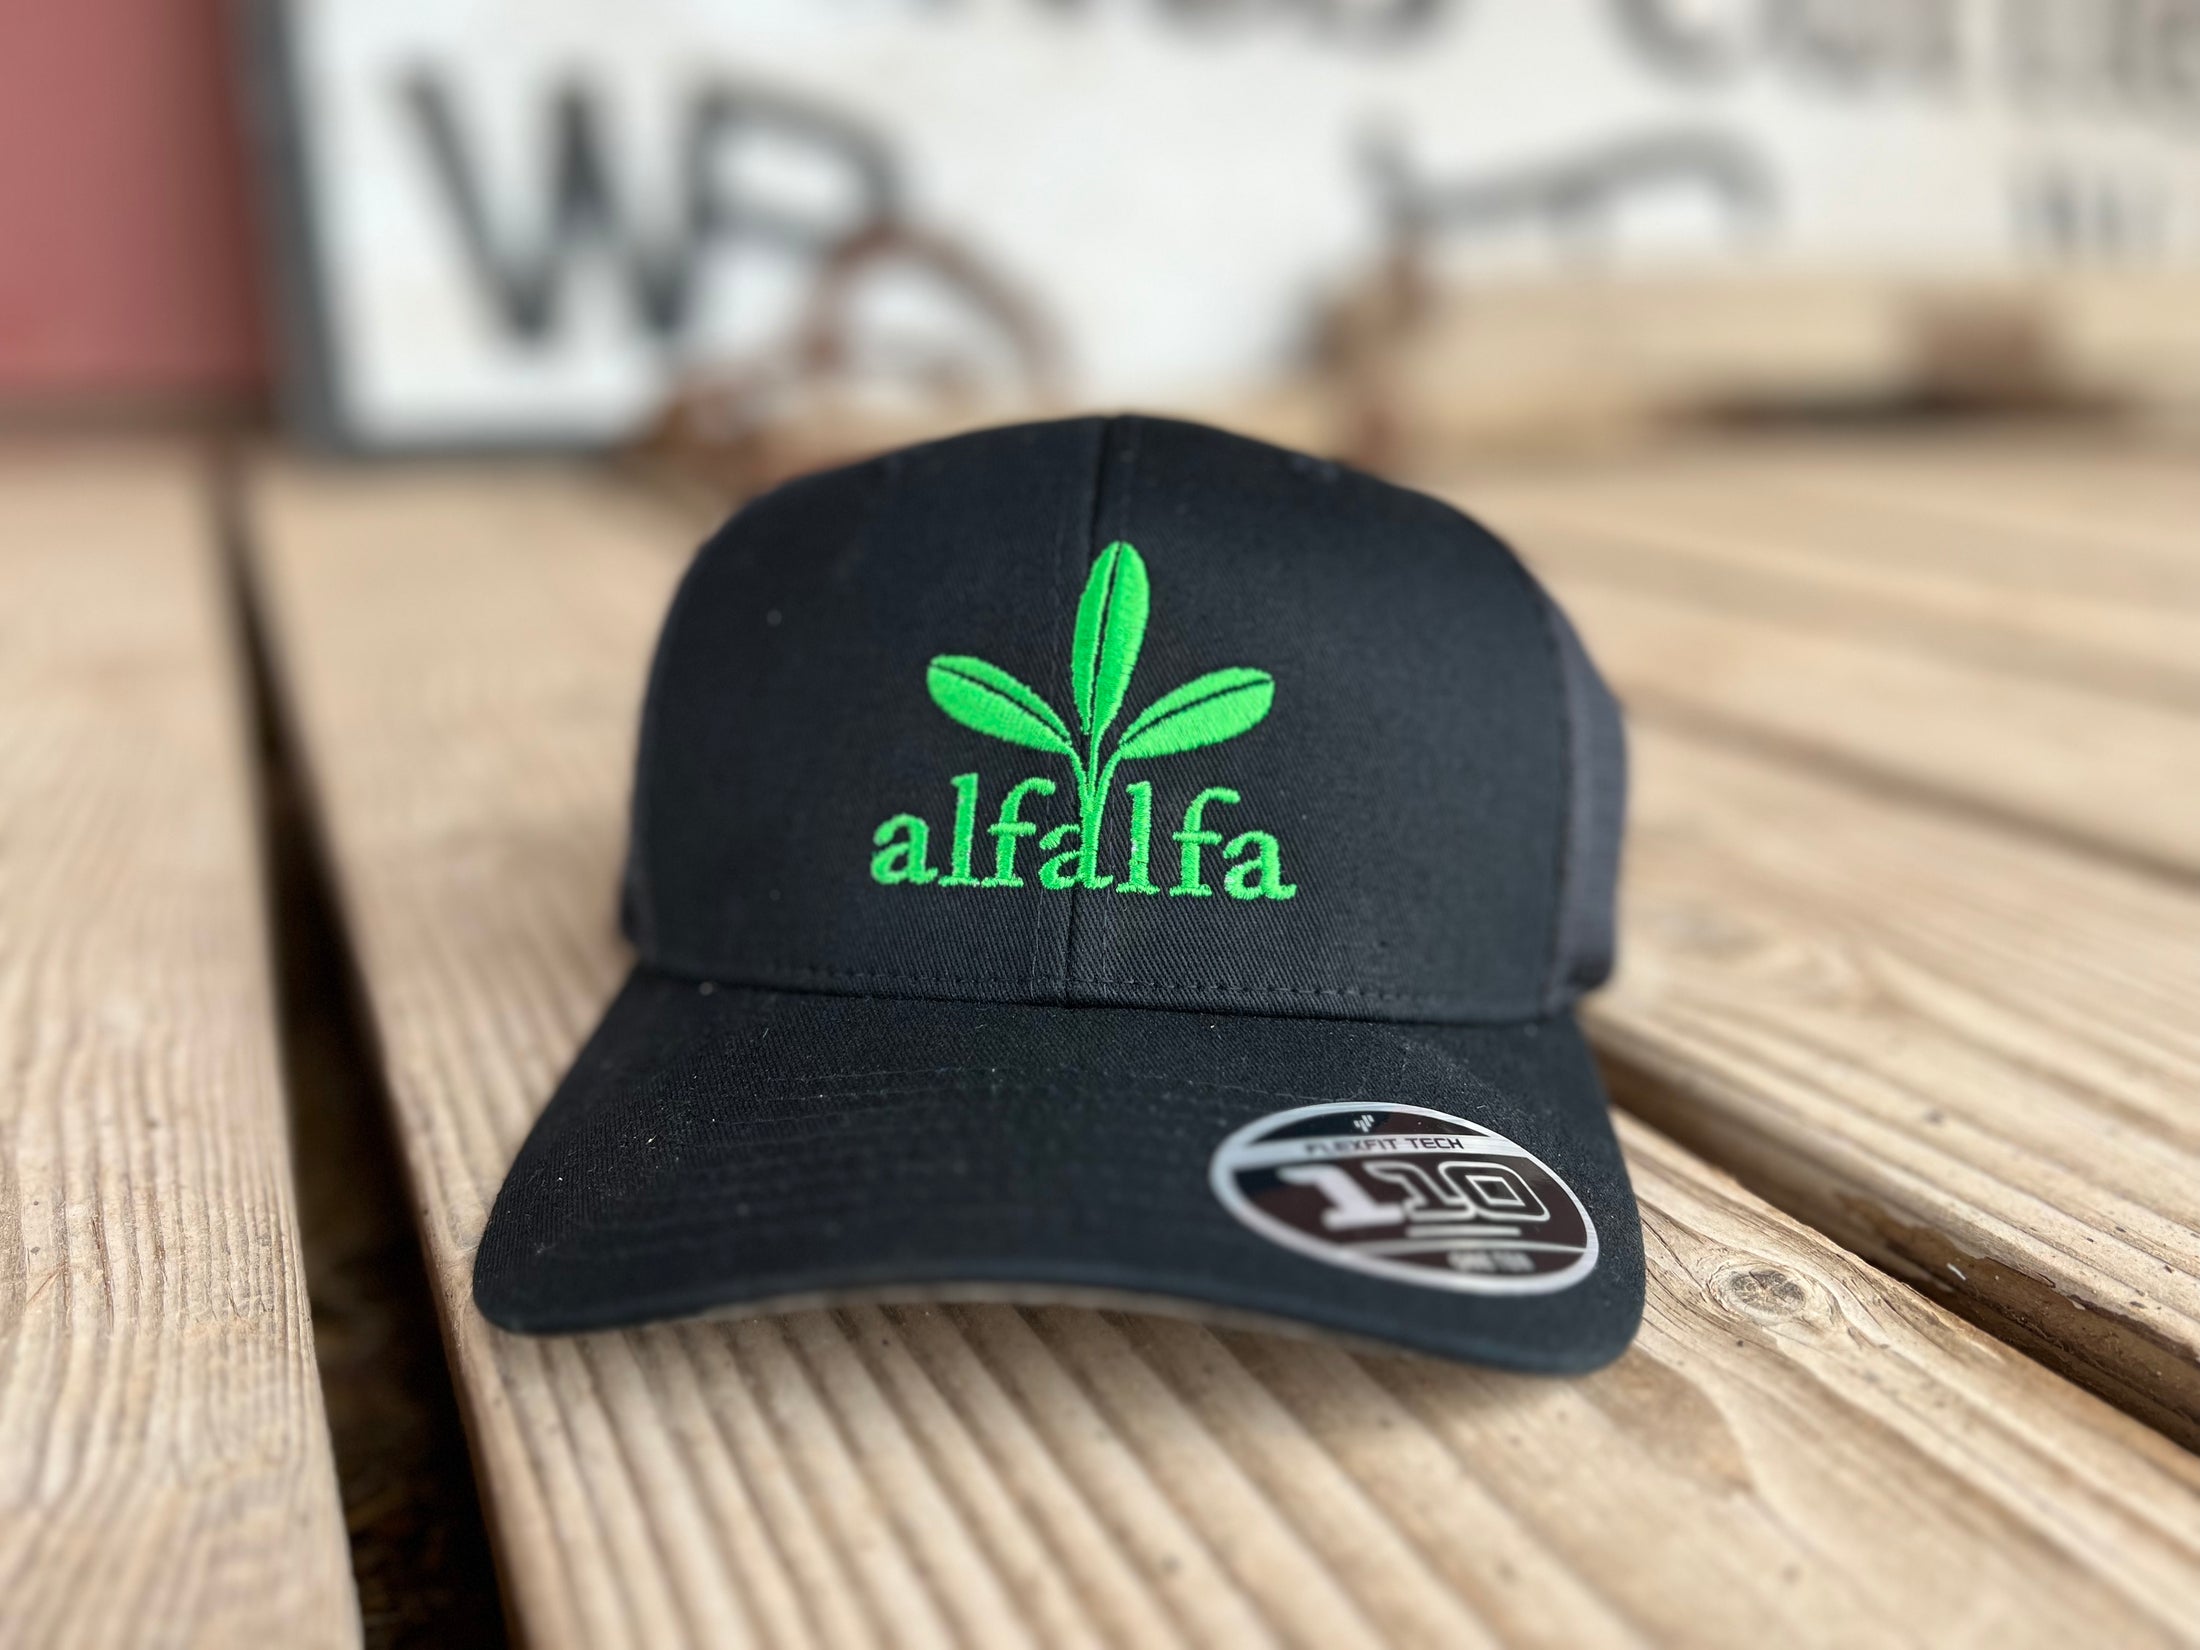 The Alfalfa Trucker Hat